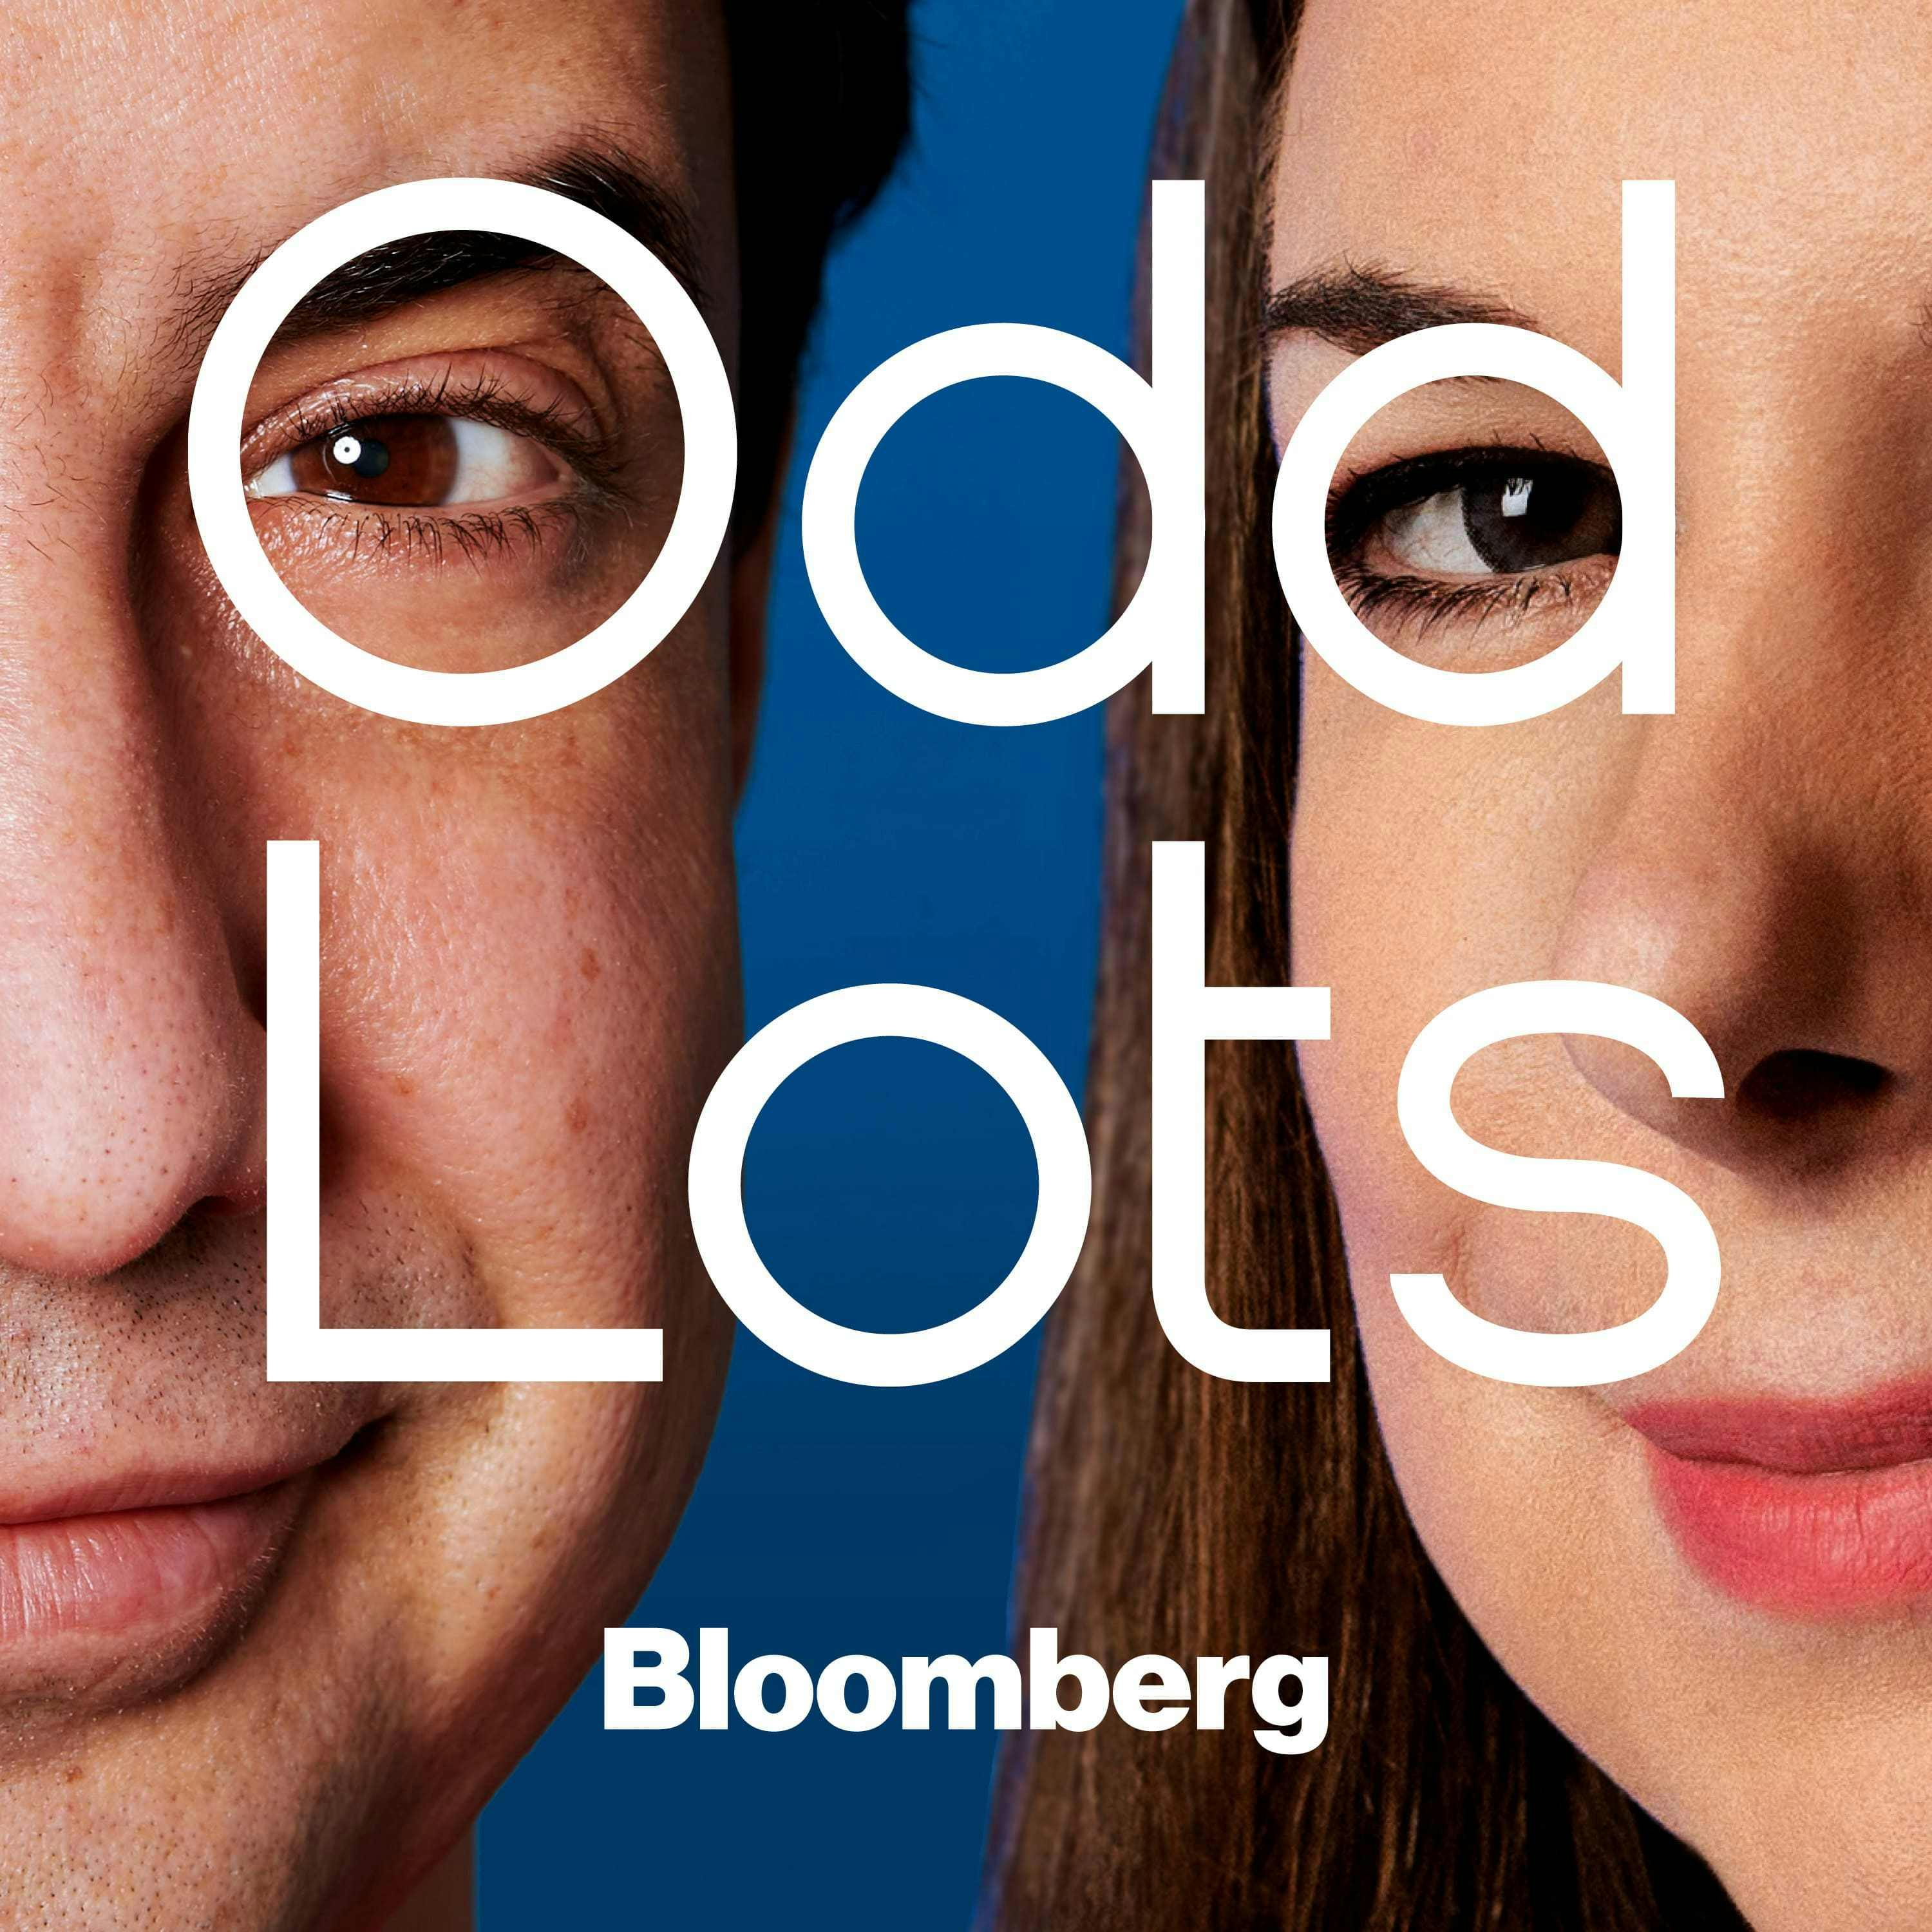 Odd Lots:Bloomberg